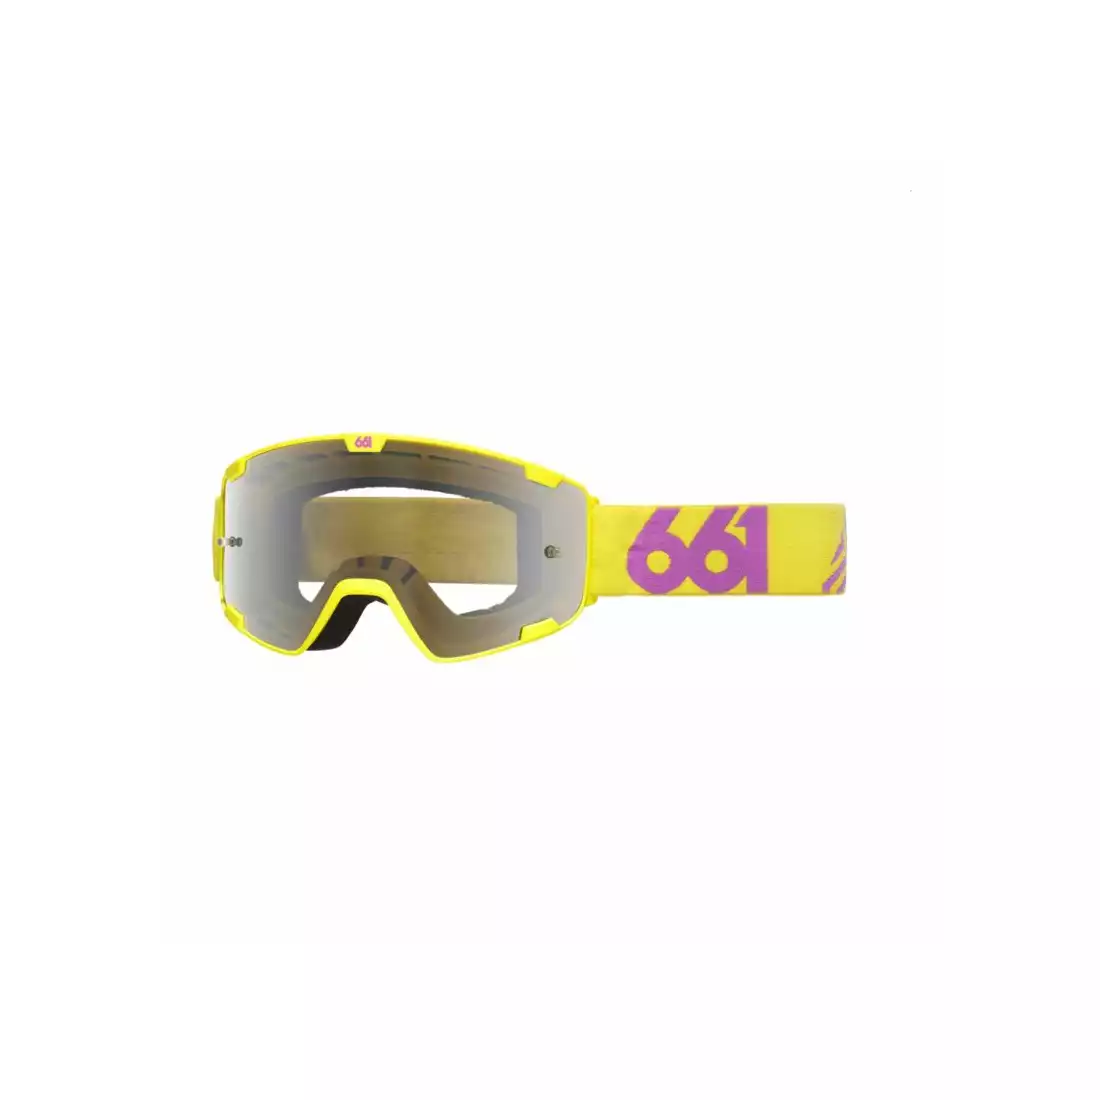 661 RADIA dazzle bicycle goggles, yellow-purple